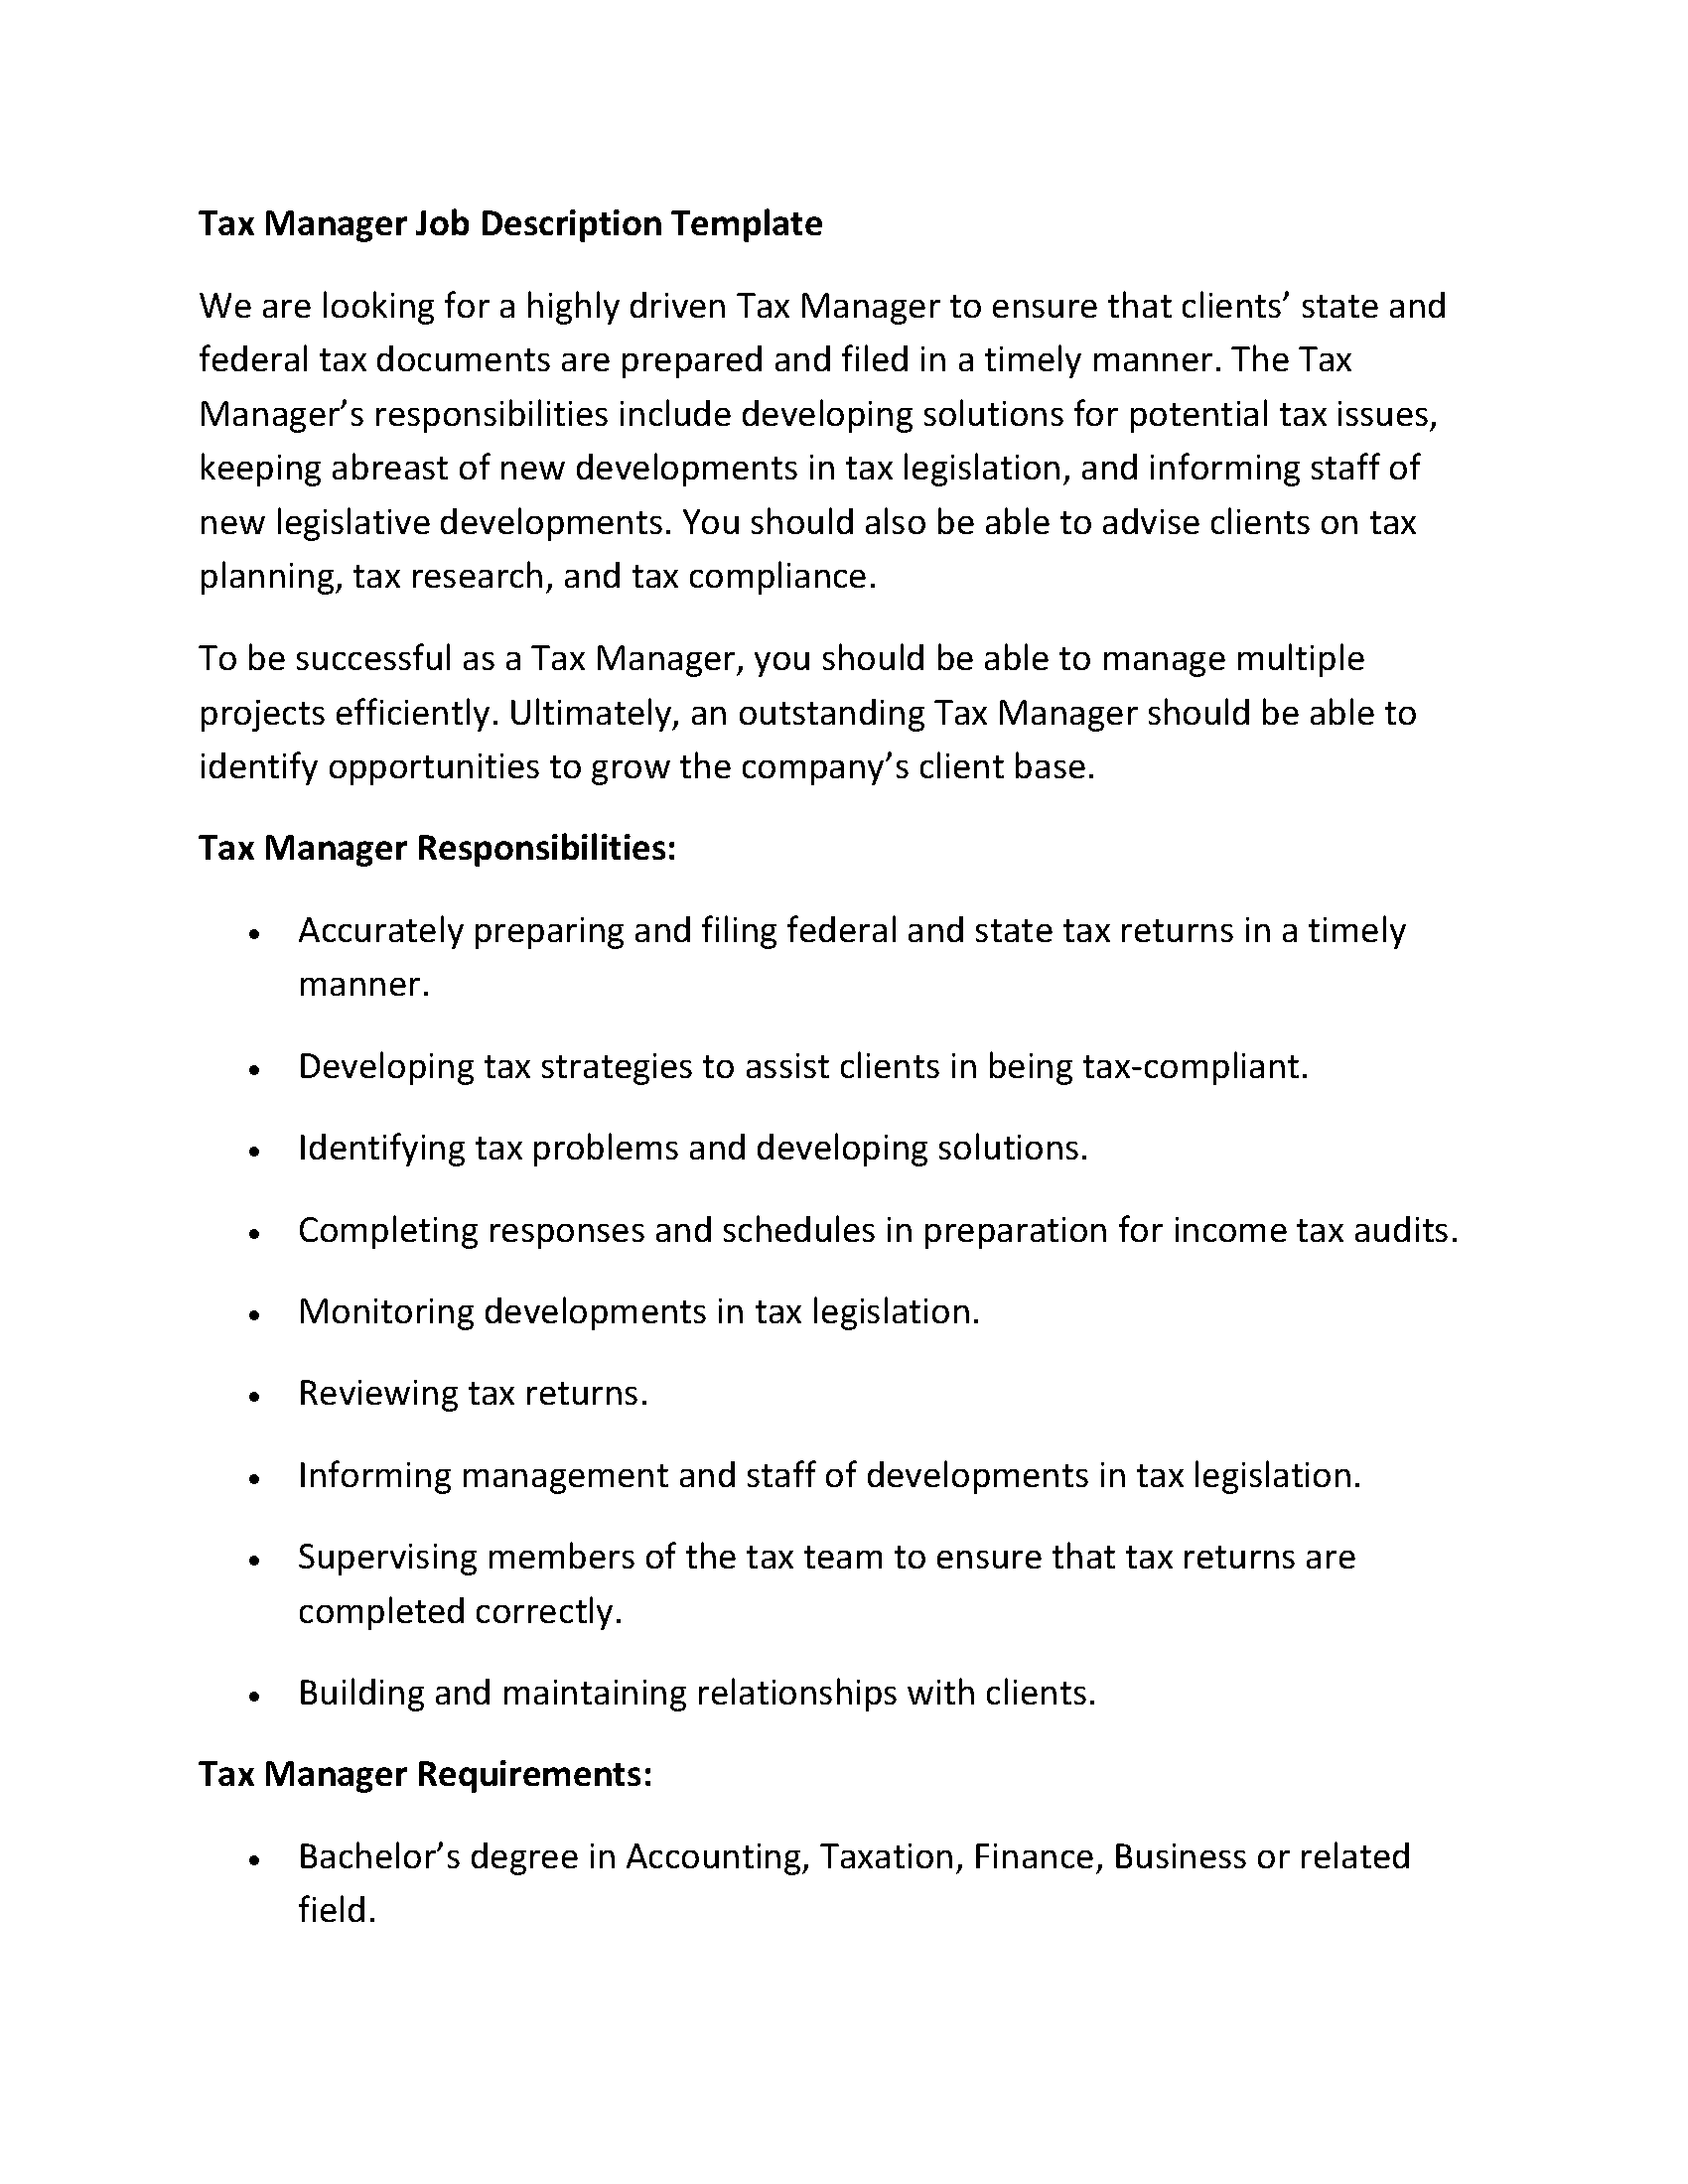 Tax Manager Job Description Template